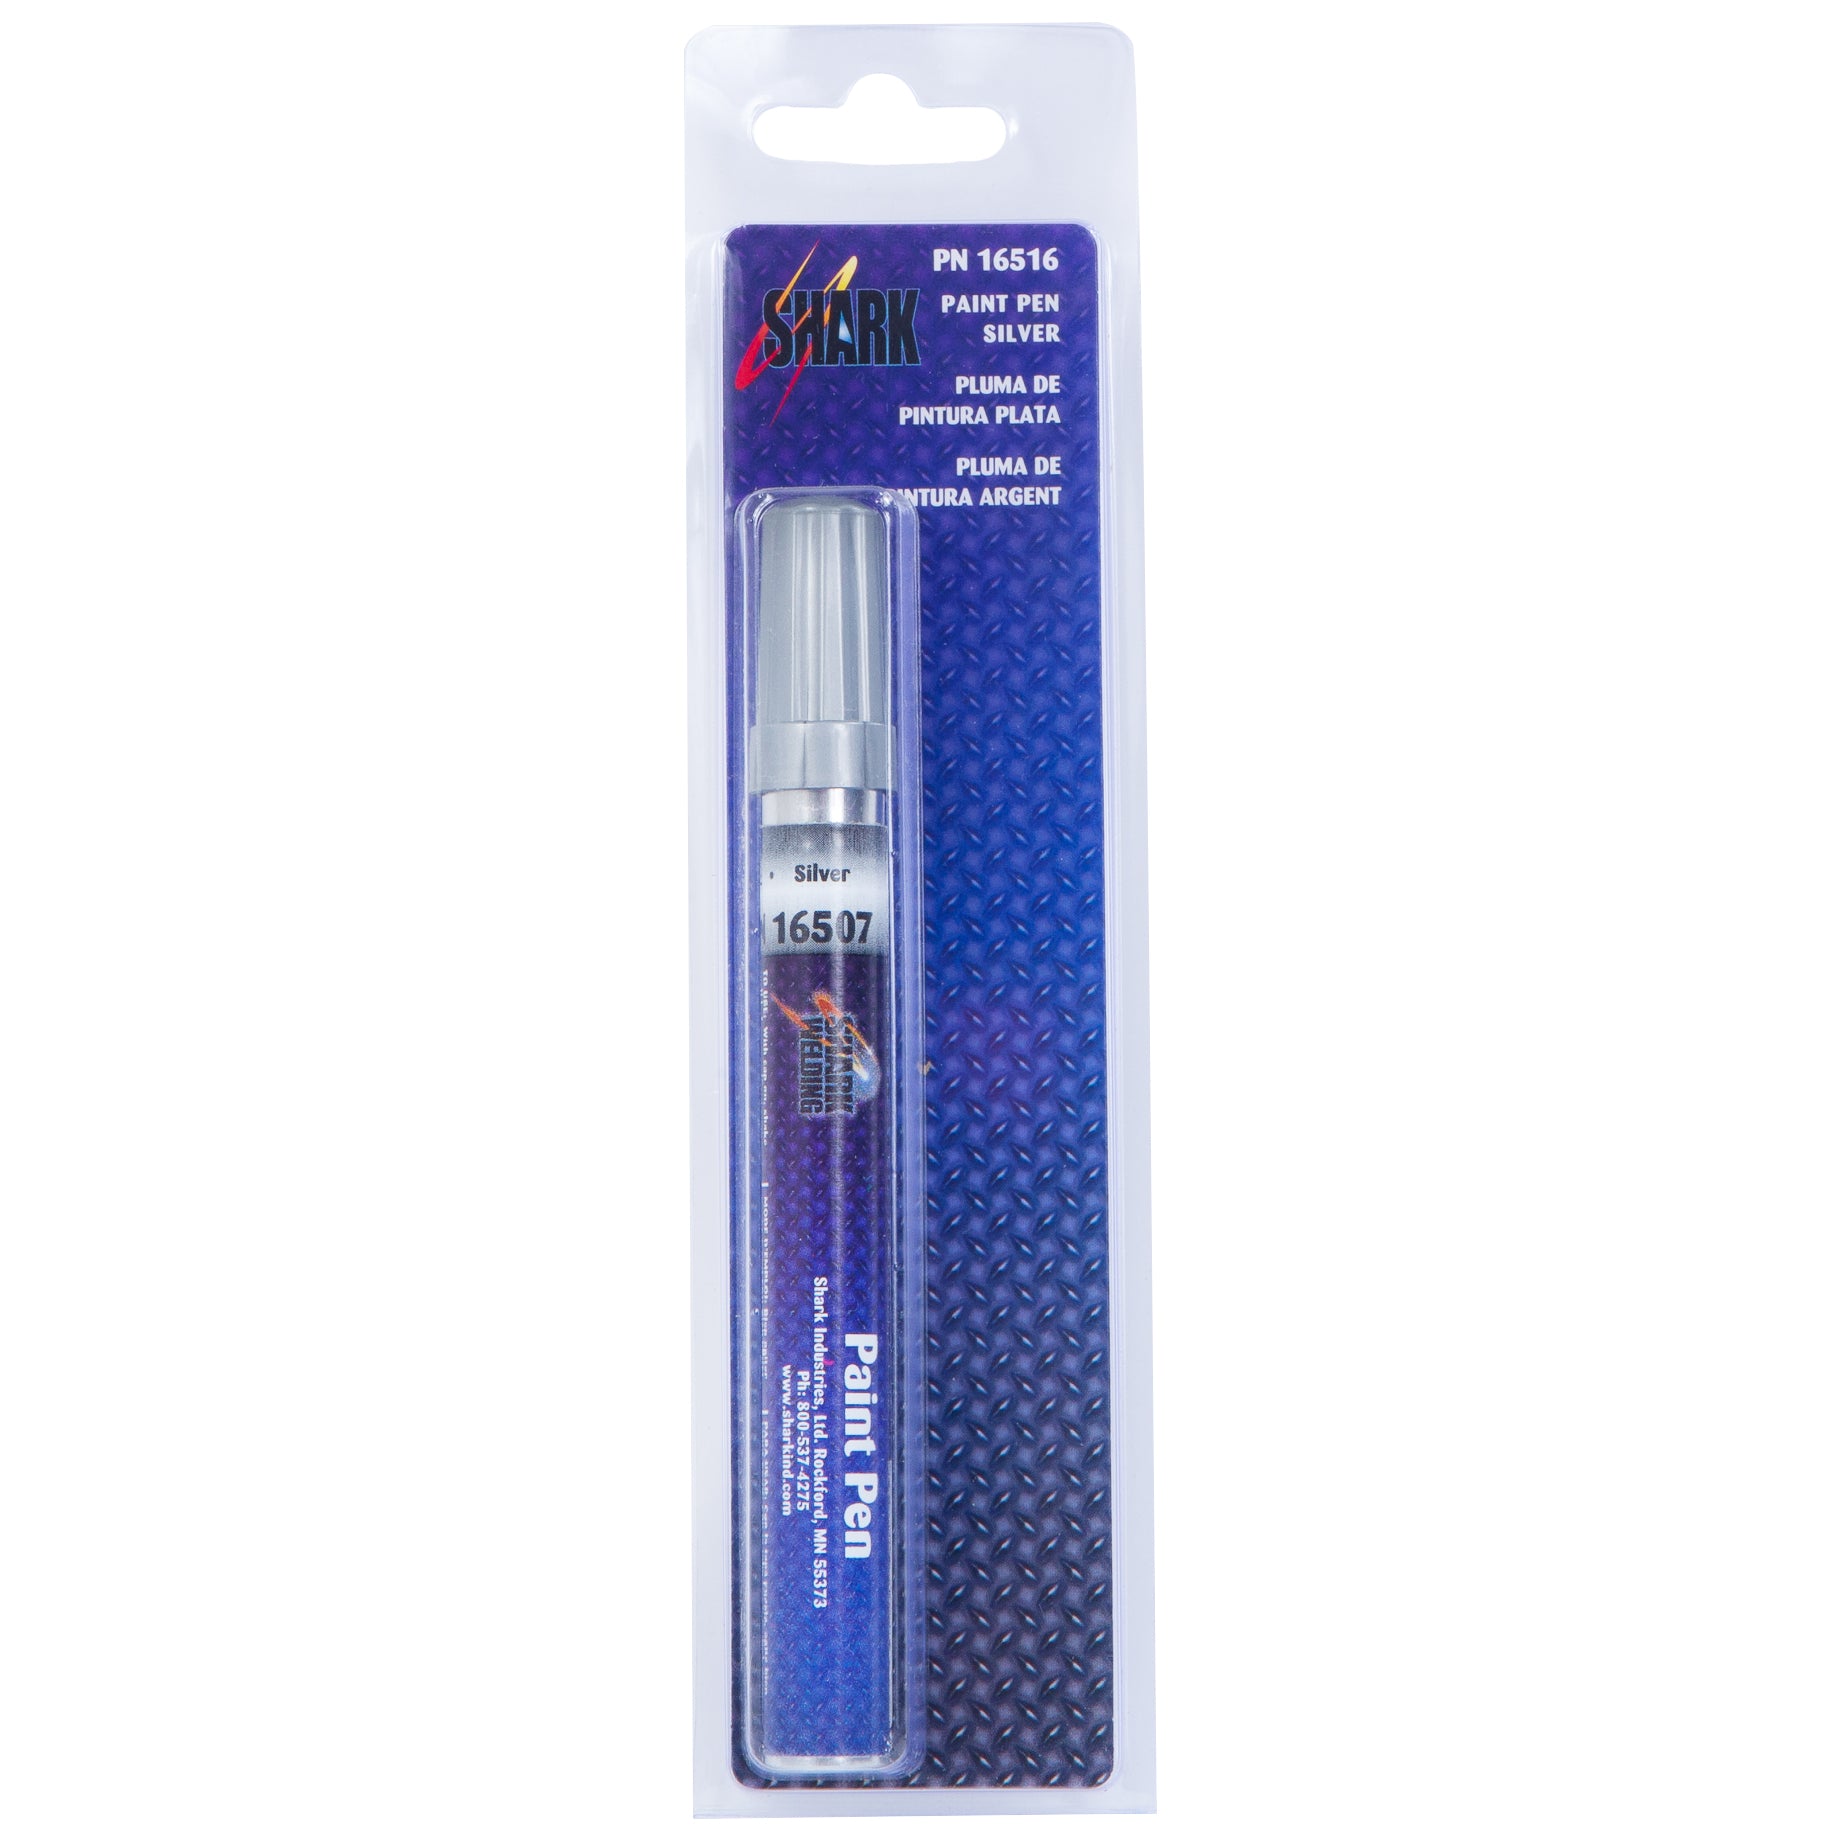 Shark Industries 16507 Paint Pen (Silver) - MPR Tools & Equipment